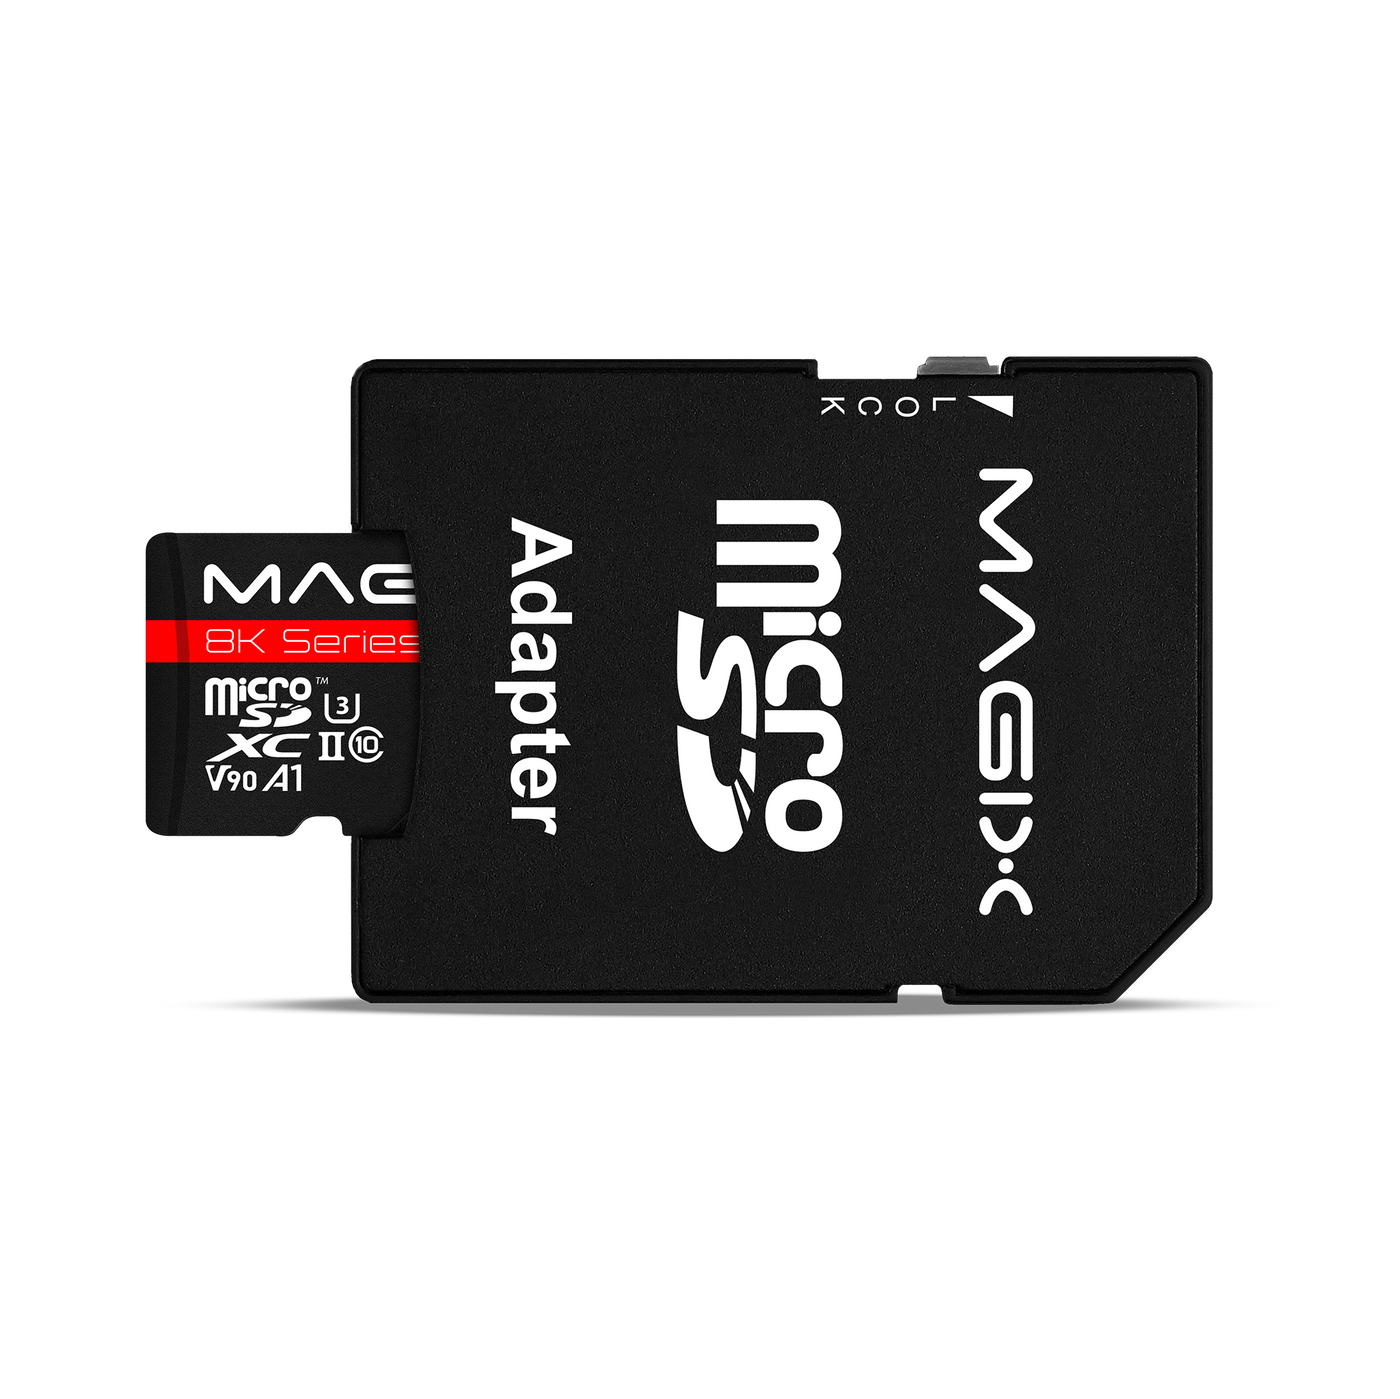 MAGIX MicroSD Card 8K Series + SD Adapter Class10 V90